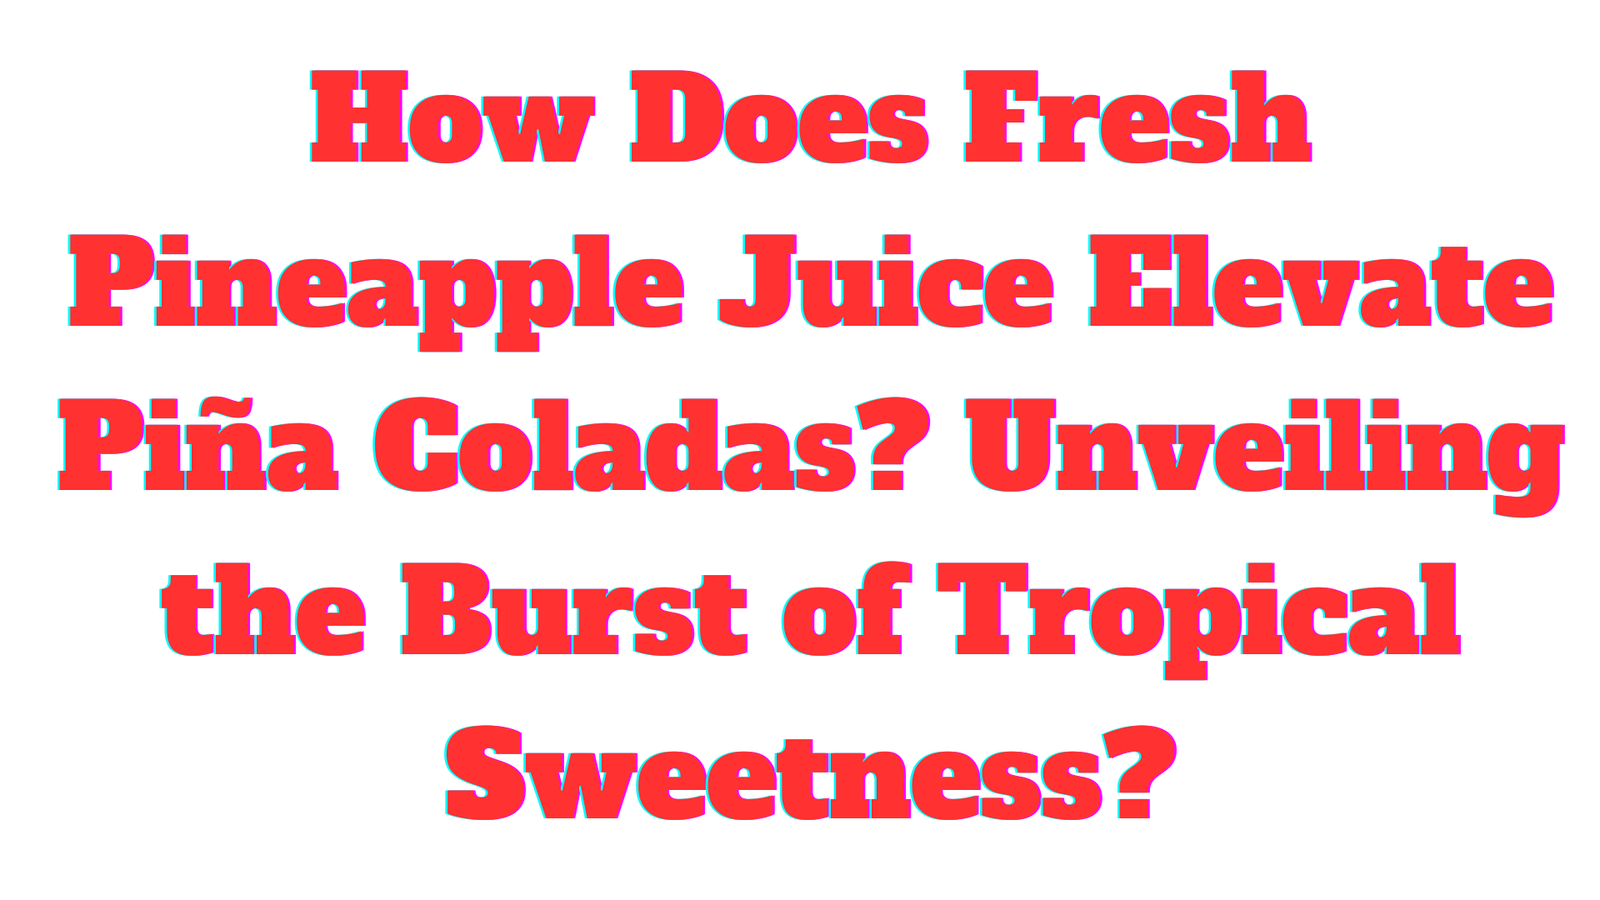 How Does Fresh Pineapple Juice Elevate Piña Coladas?